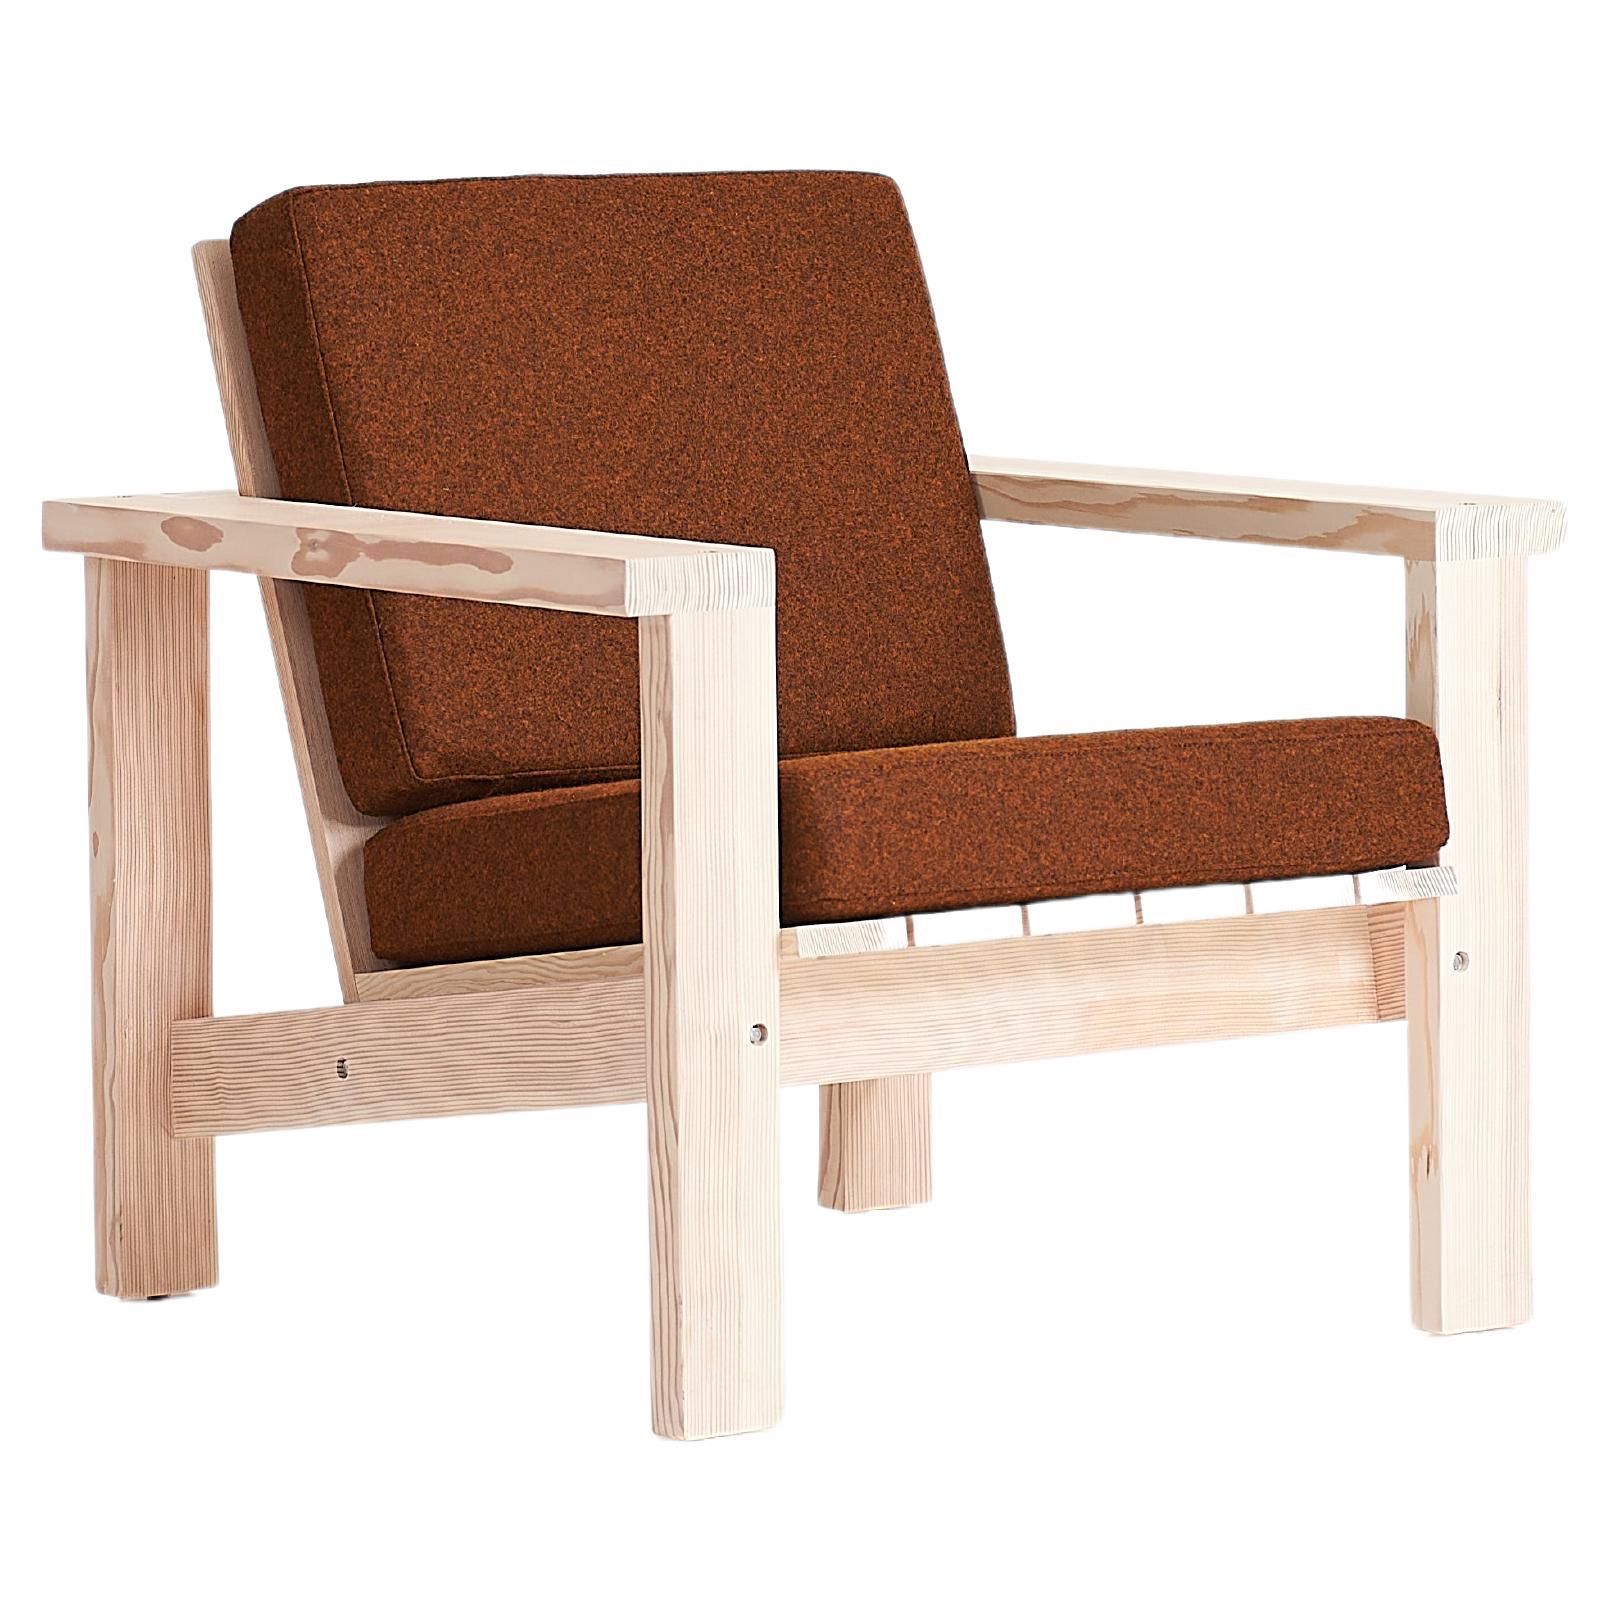 The Plank Lounge - Holz-Loungesessel mit gepolstertem Sitzkissen